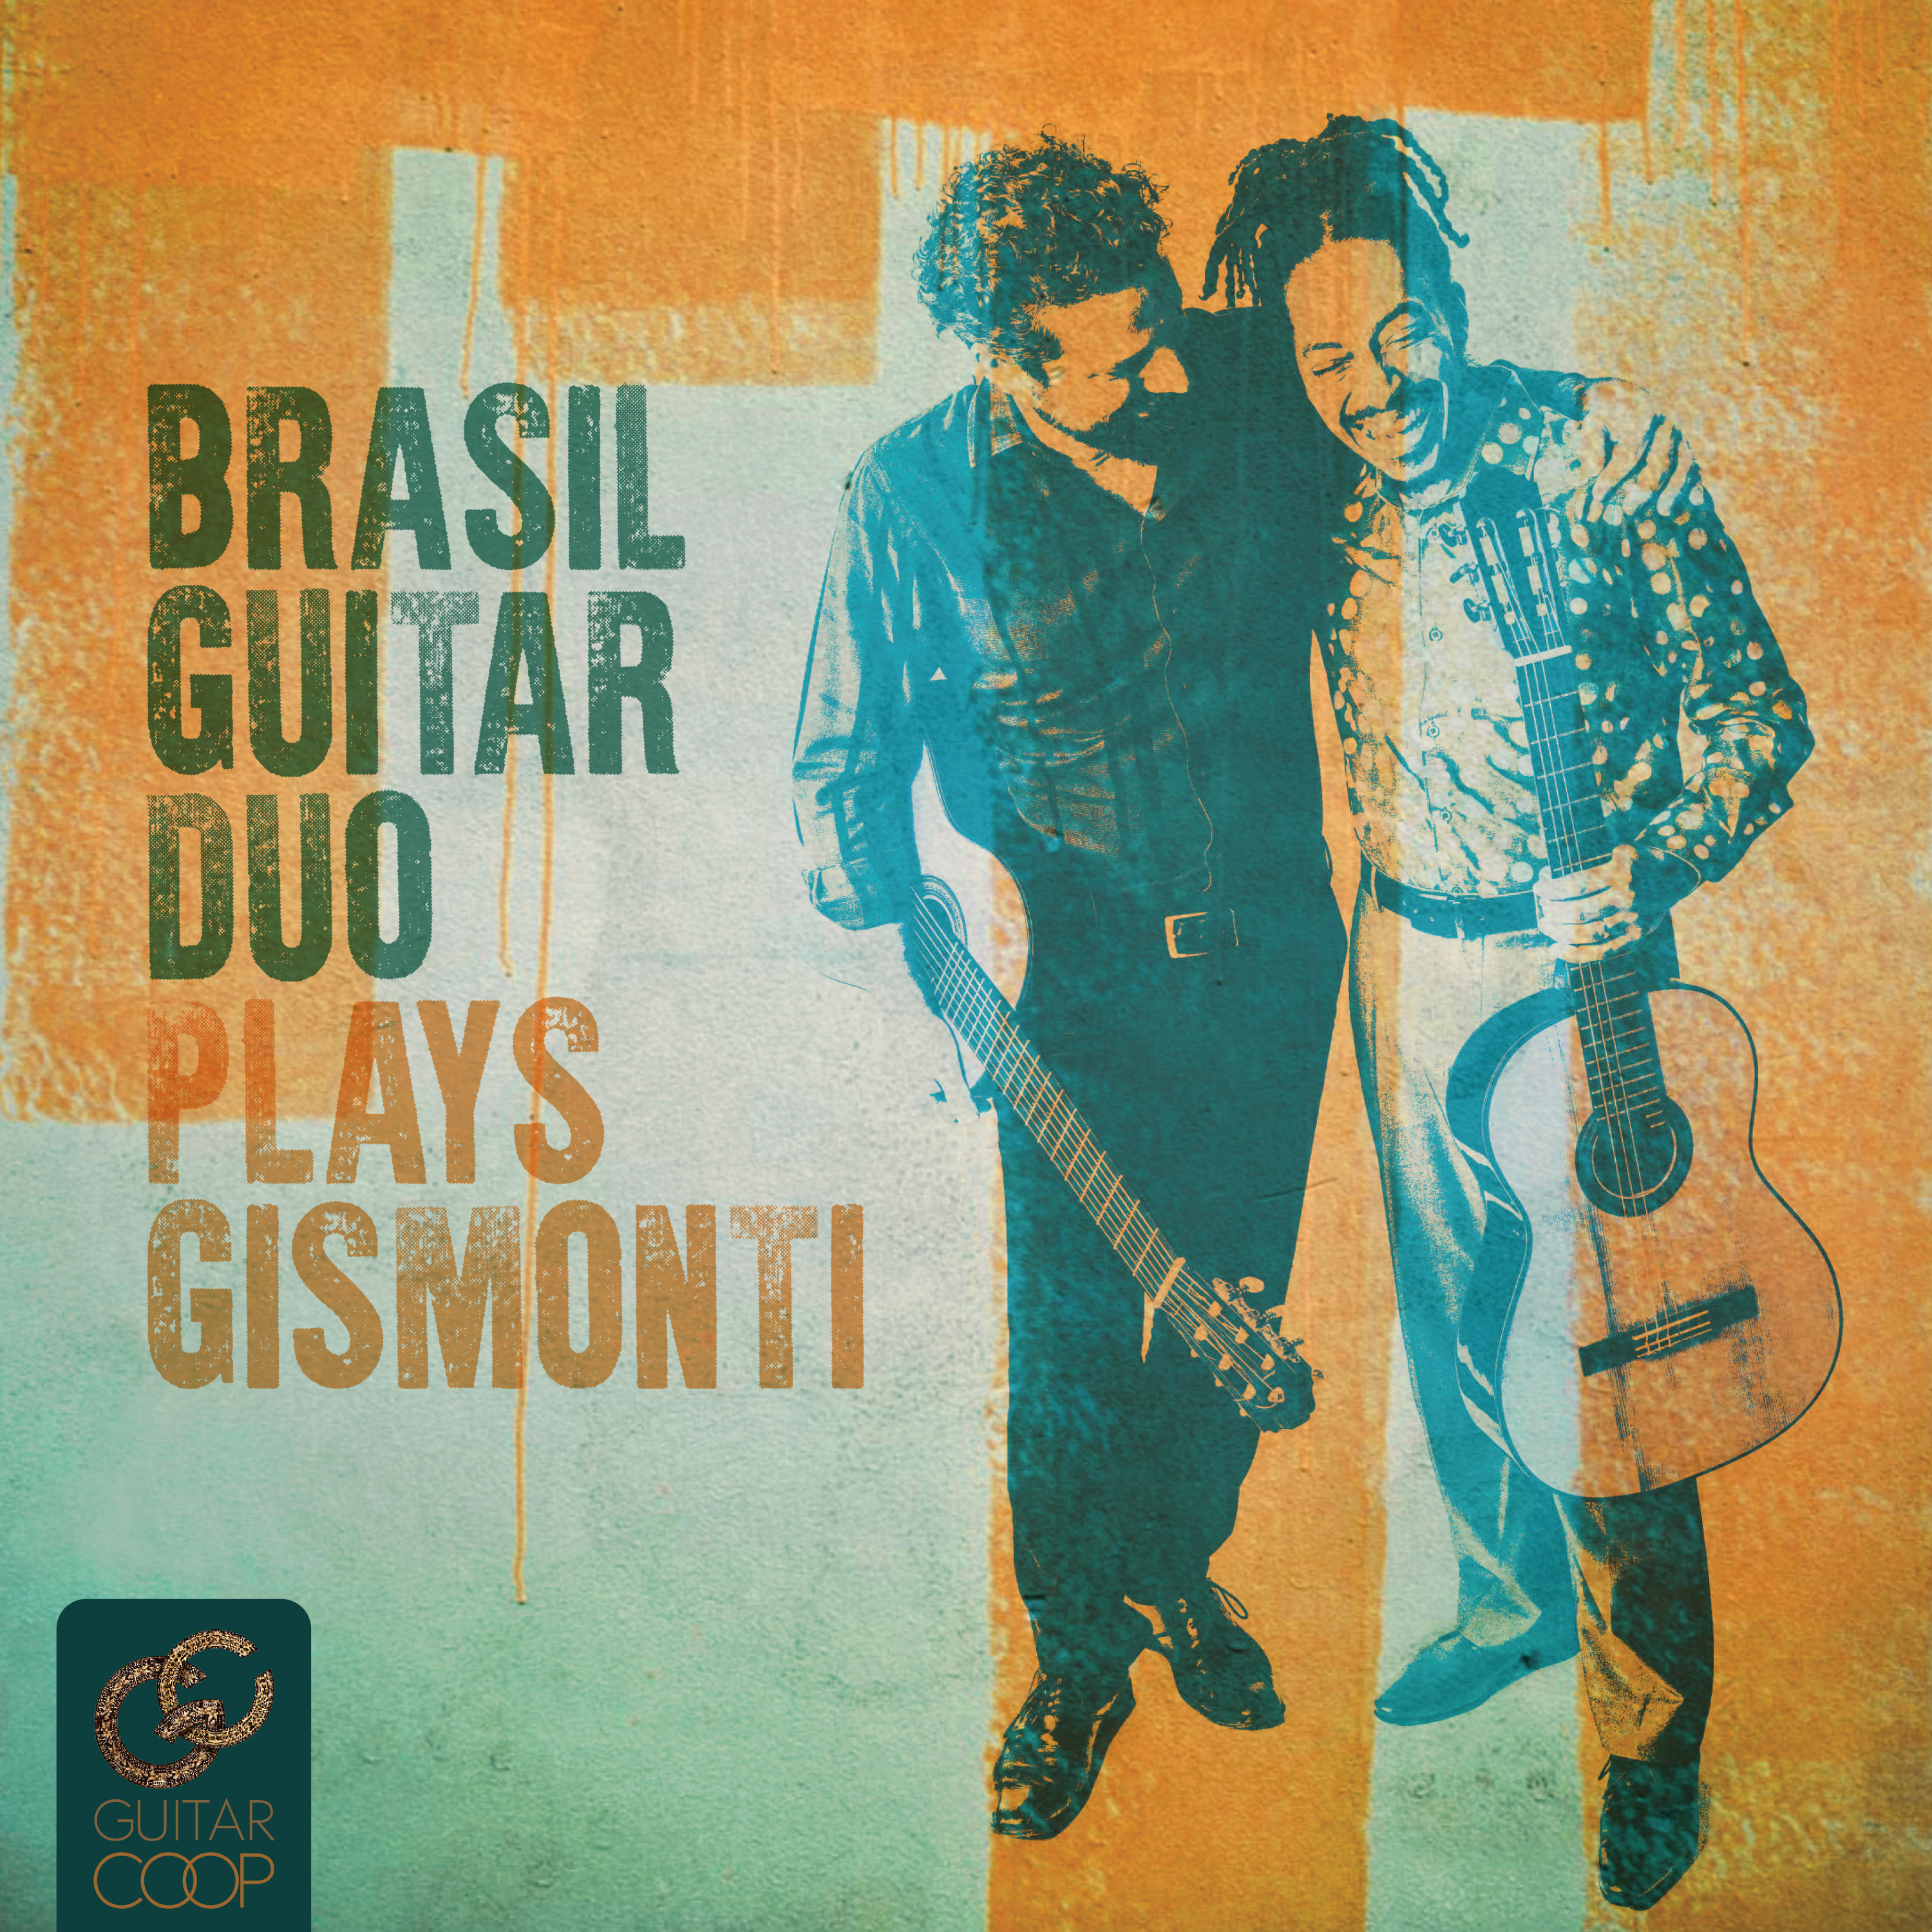 Brazil Guitar Duo - BGD plays Gismonti